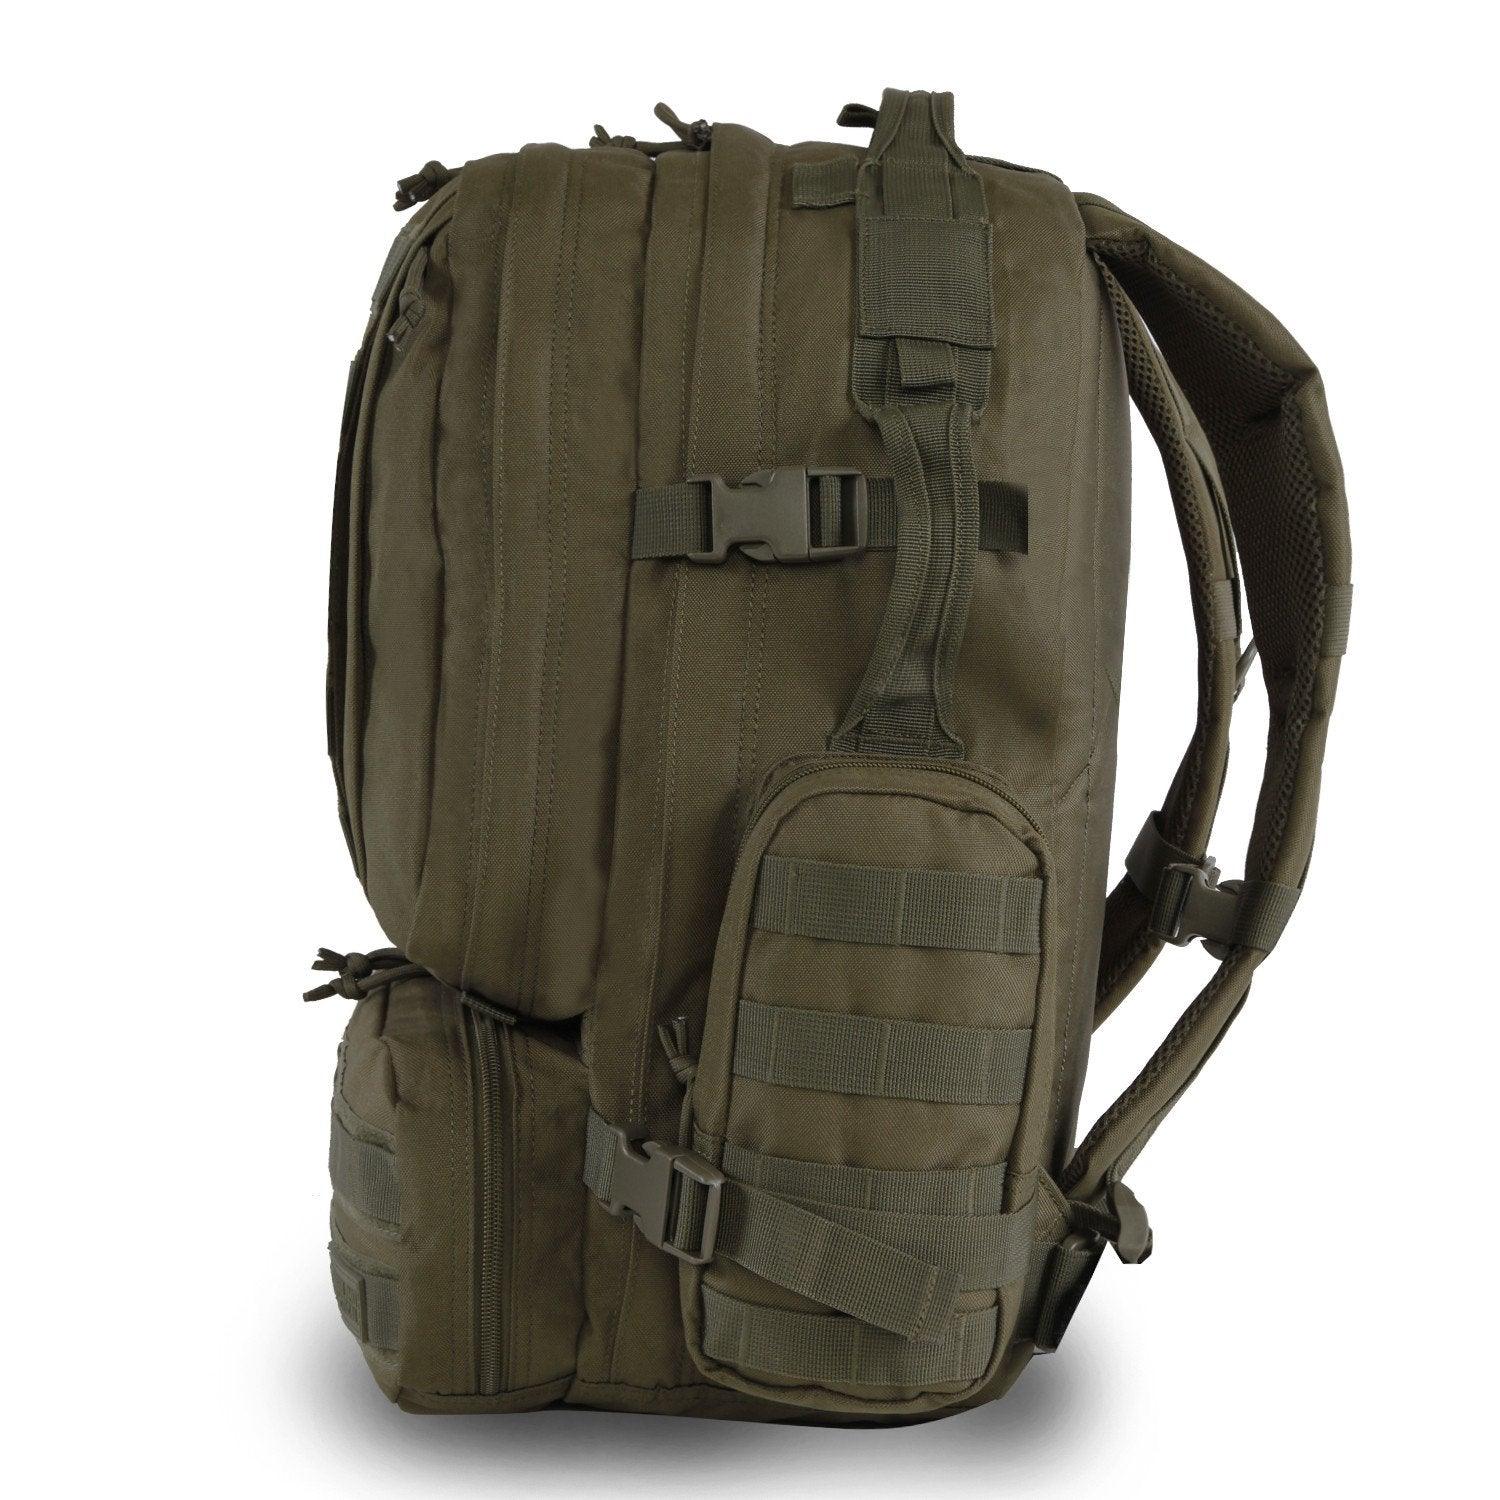 Highland Tactical Apollo Heavy Duty Tactical Backpack - Desert